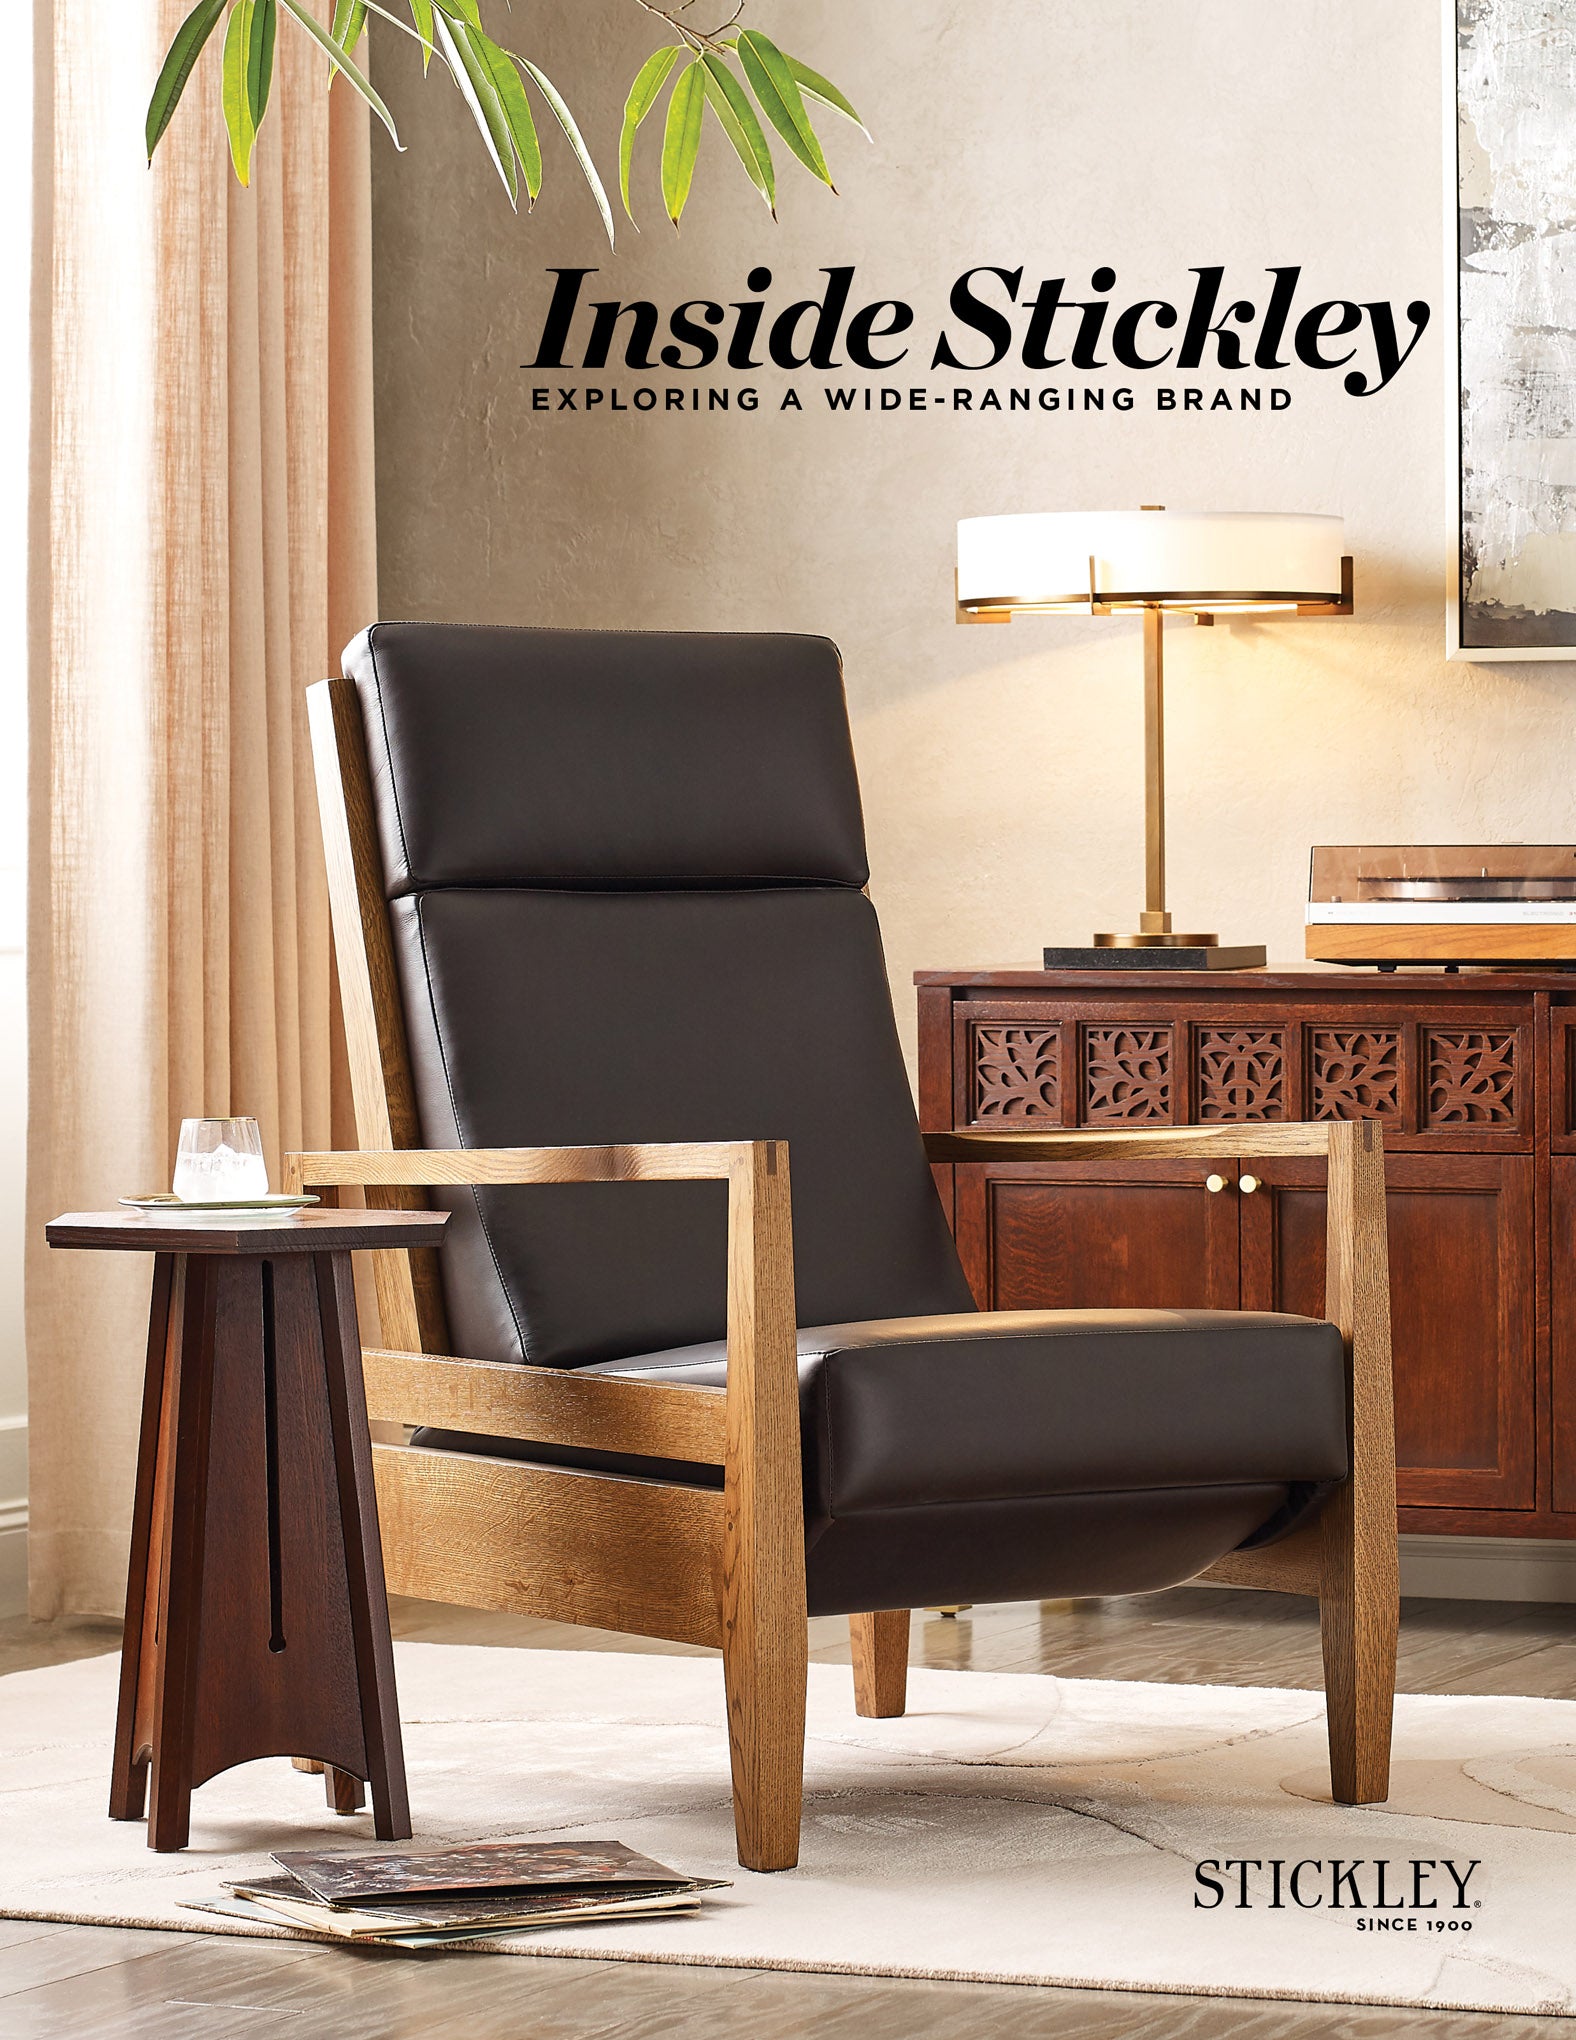 Inside Stickley: Exploring a Wide-Ranging Brand - Stickley Furniture | Mattress